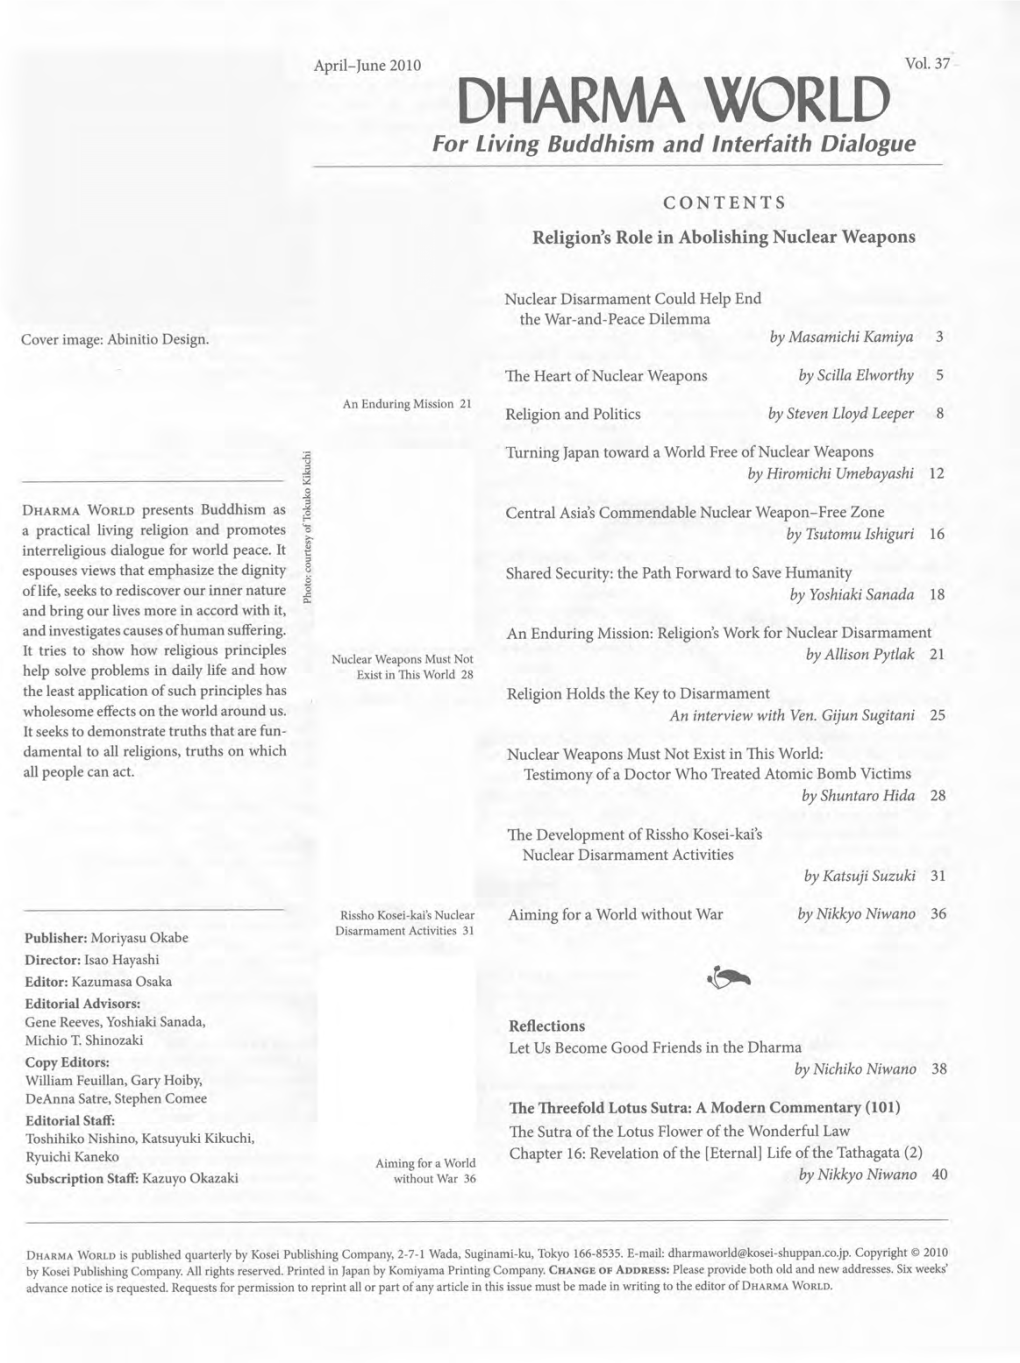 April-June 2010, Volume 37(PDF)